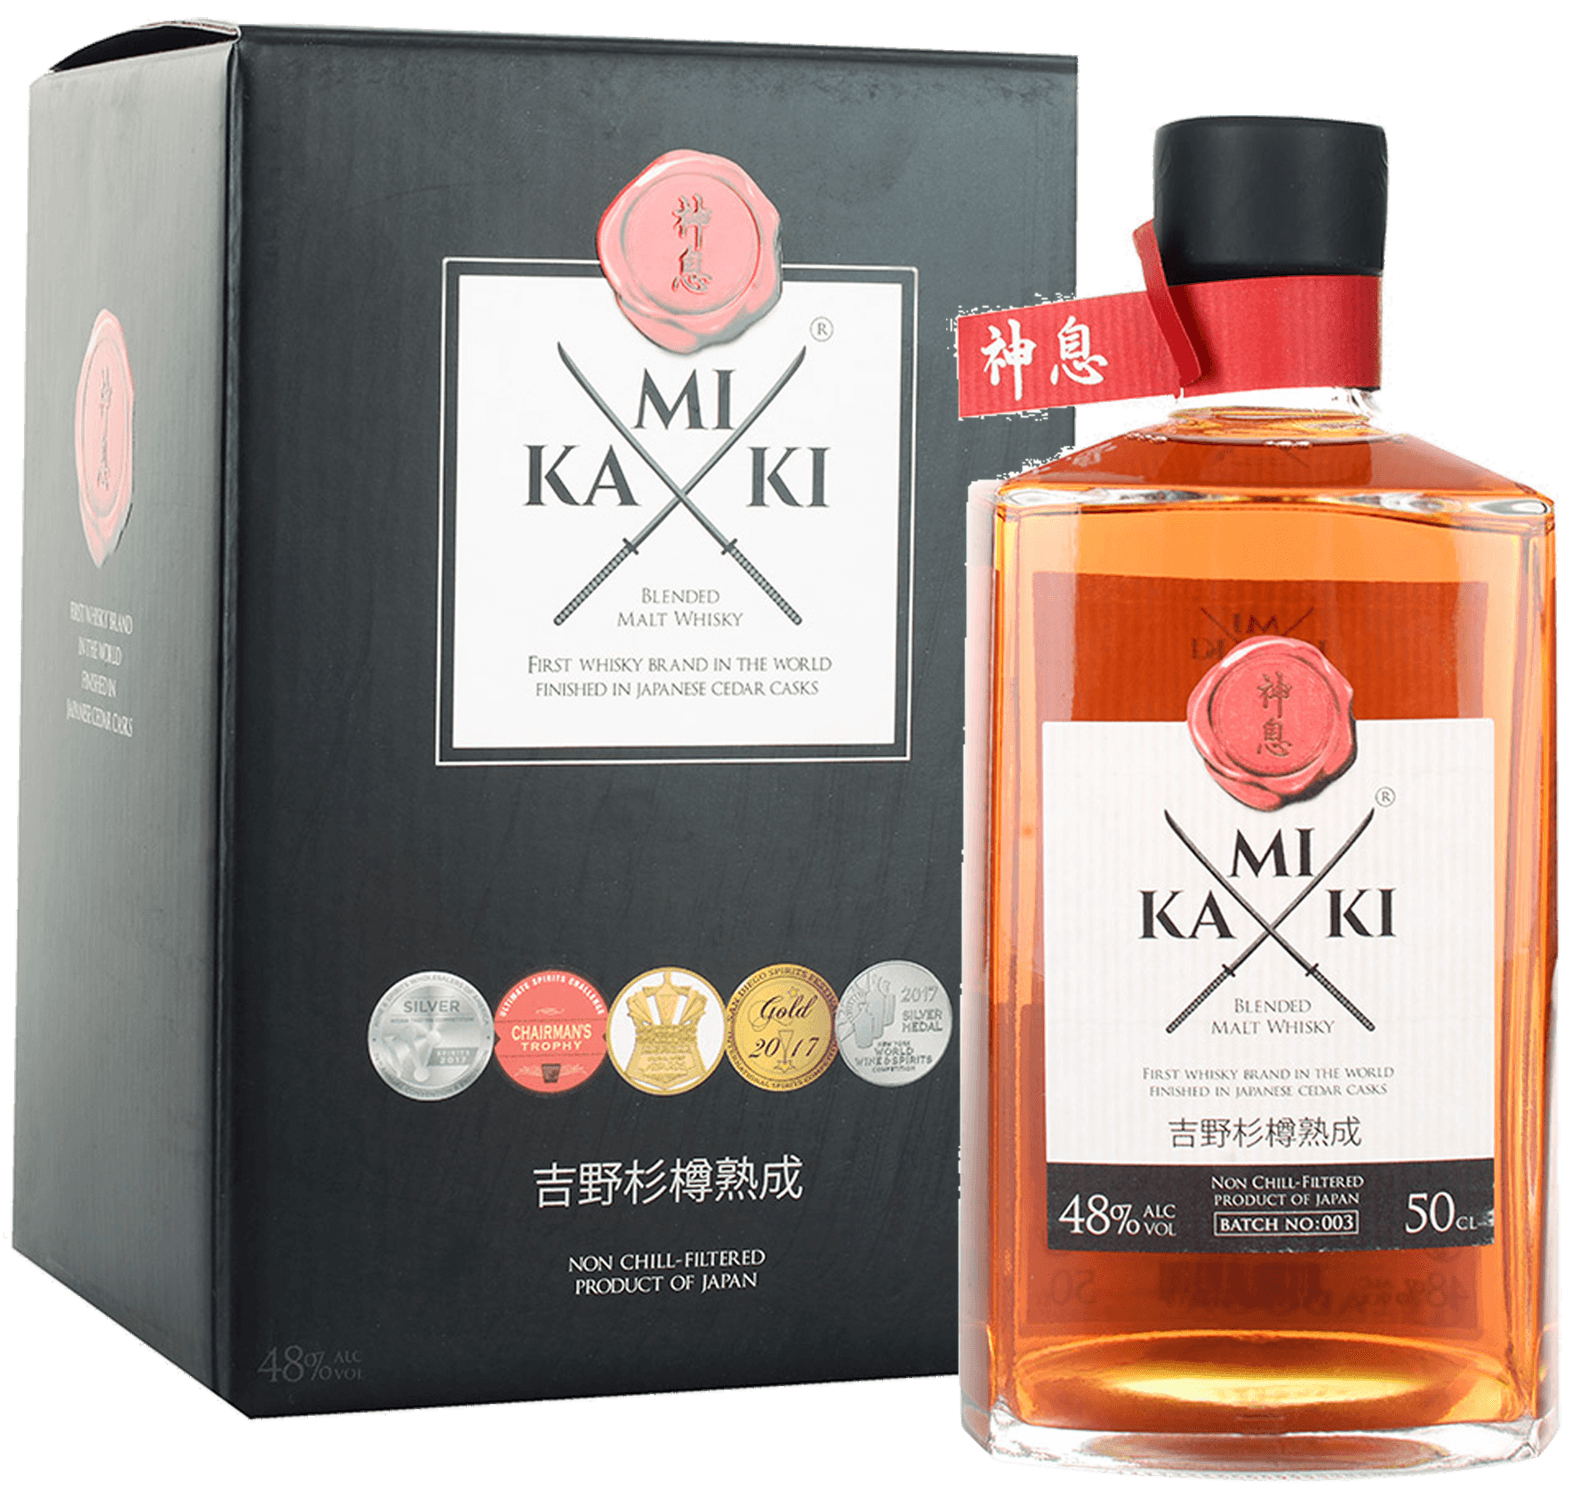 виски hatozaki pure malt gift box в подарочной упаковке япония 0 7 л Kamiki Blended Malt Whisky (gift box)